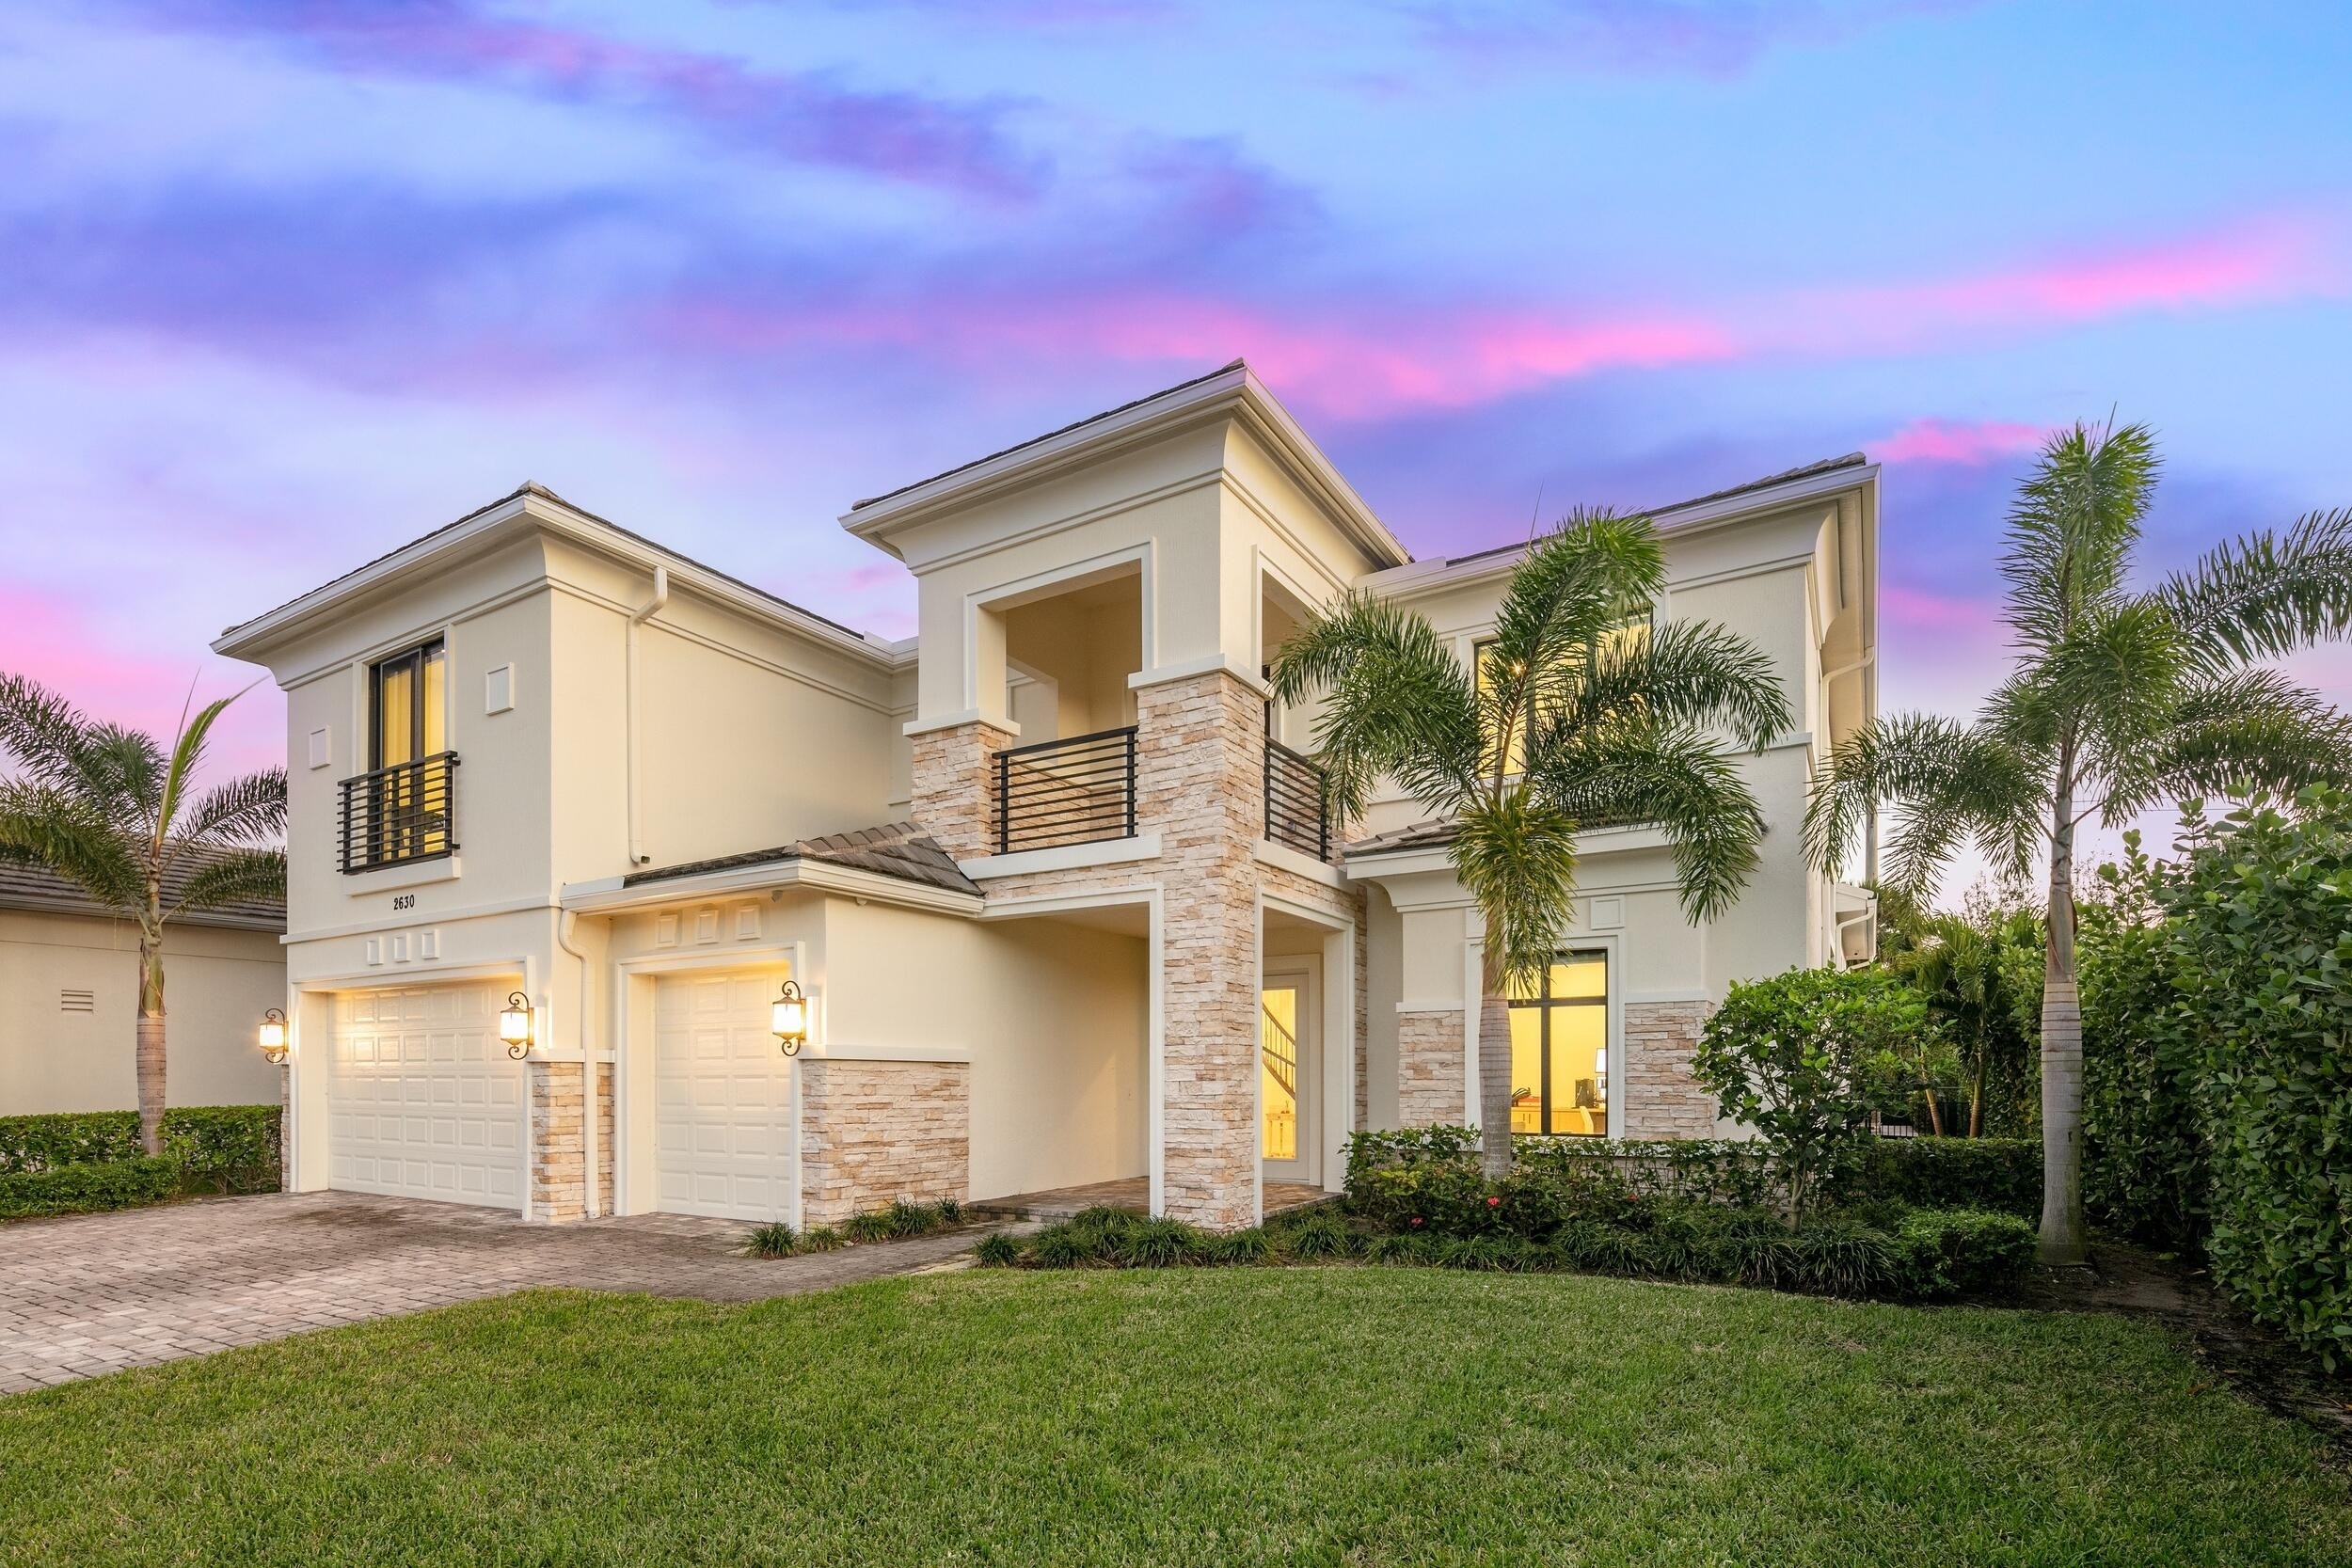 Single Family Home for Sale at Boca Raton, FL 33496